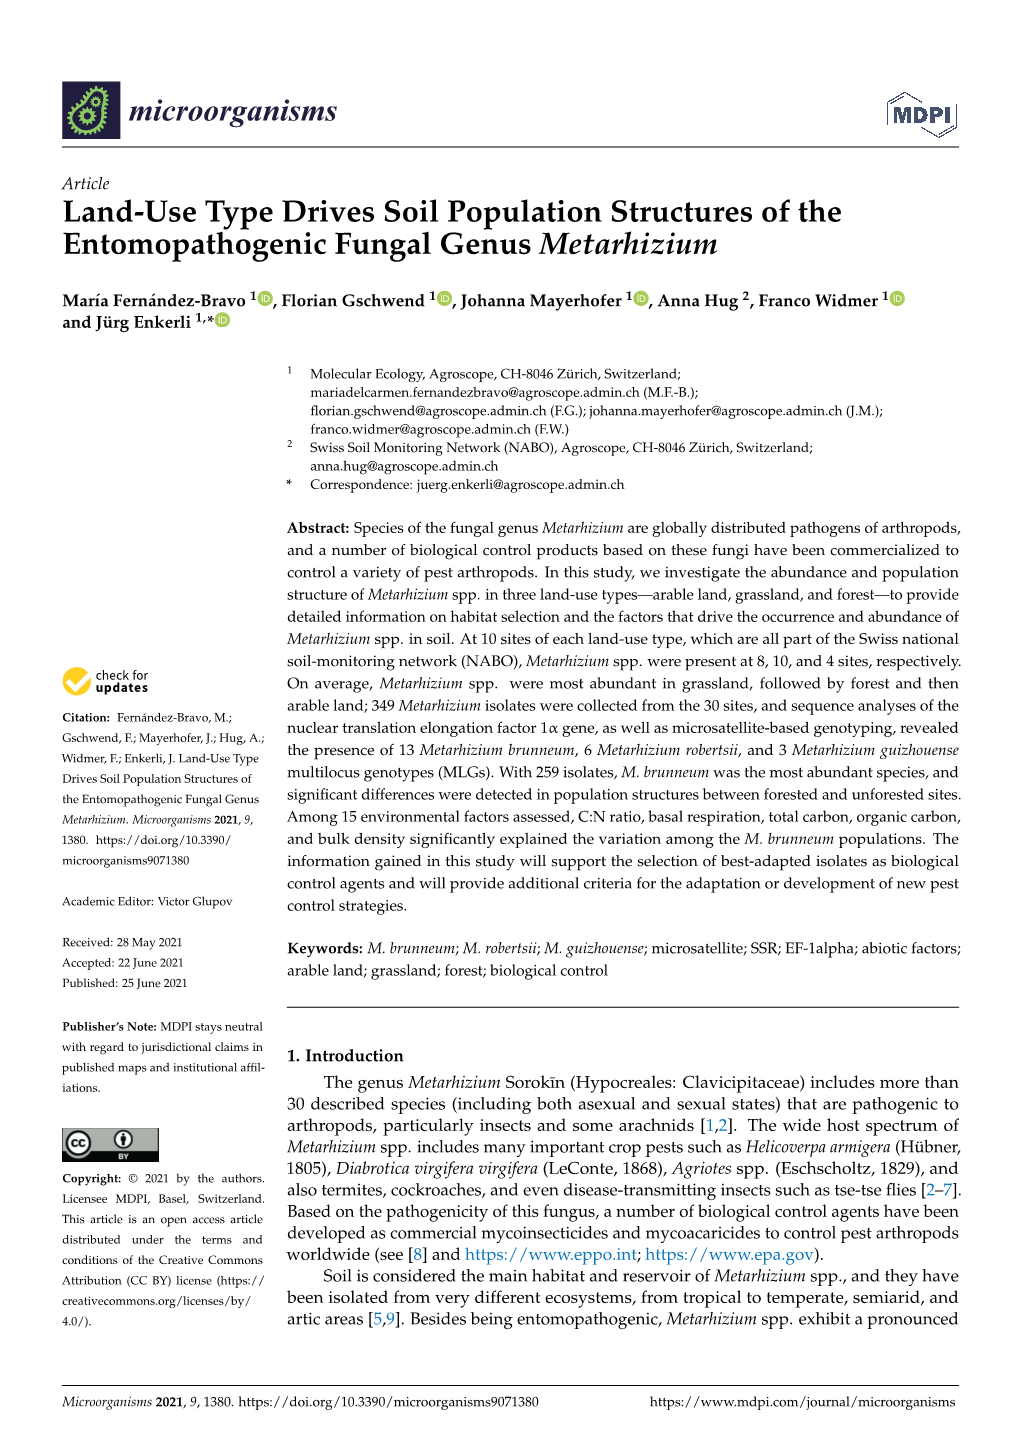 Land-Use Type Drives Soil Population Structures of the Entomopathogenic Fungal Genus Metarhizium